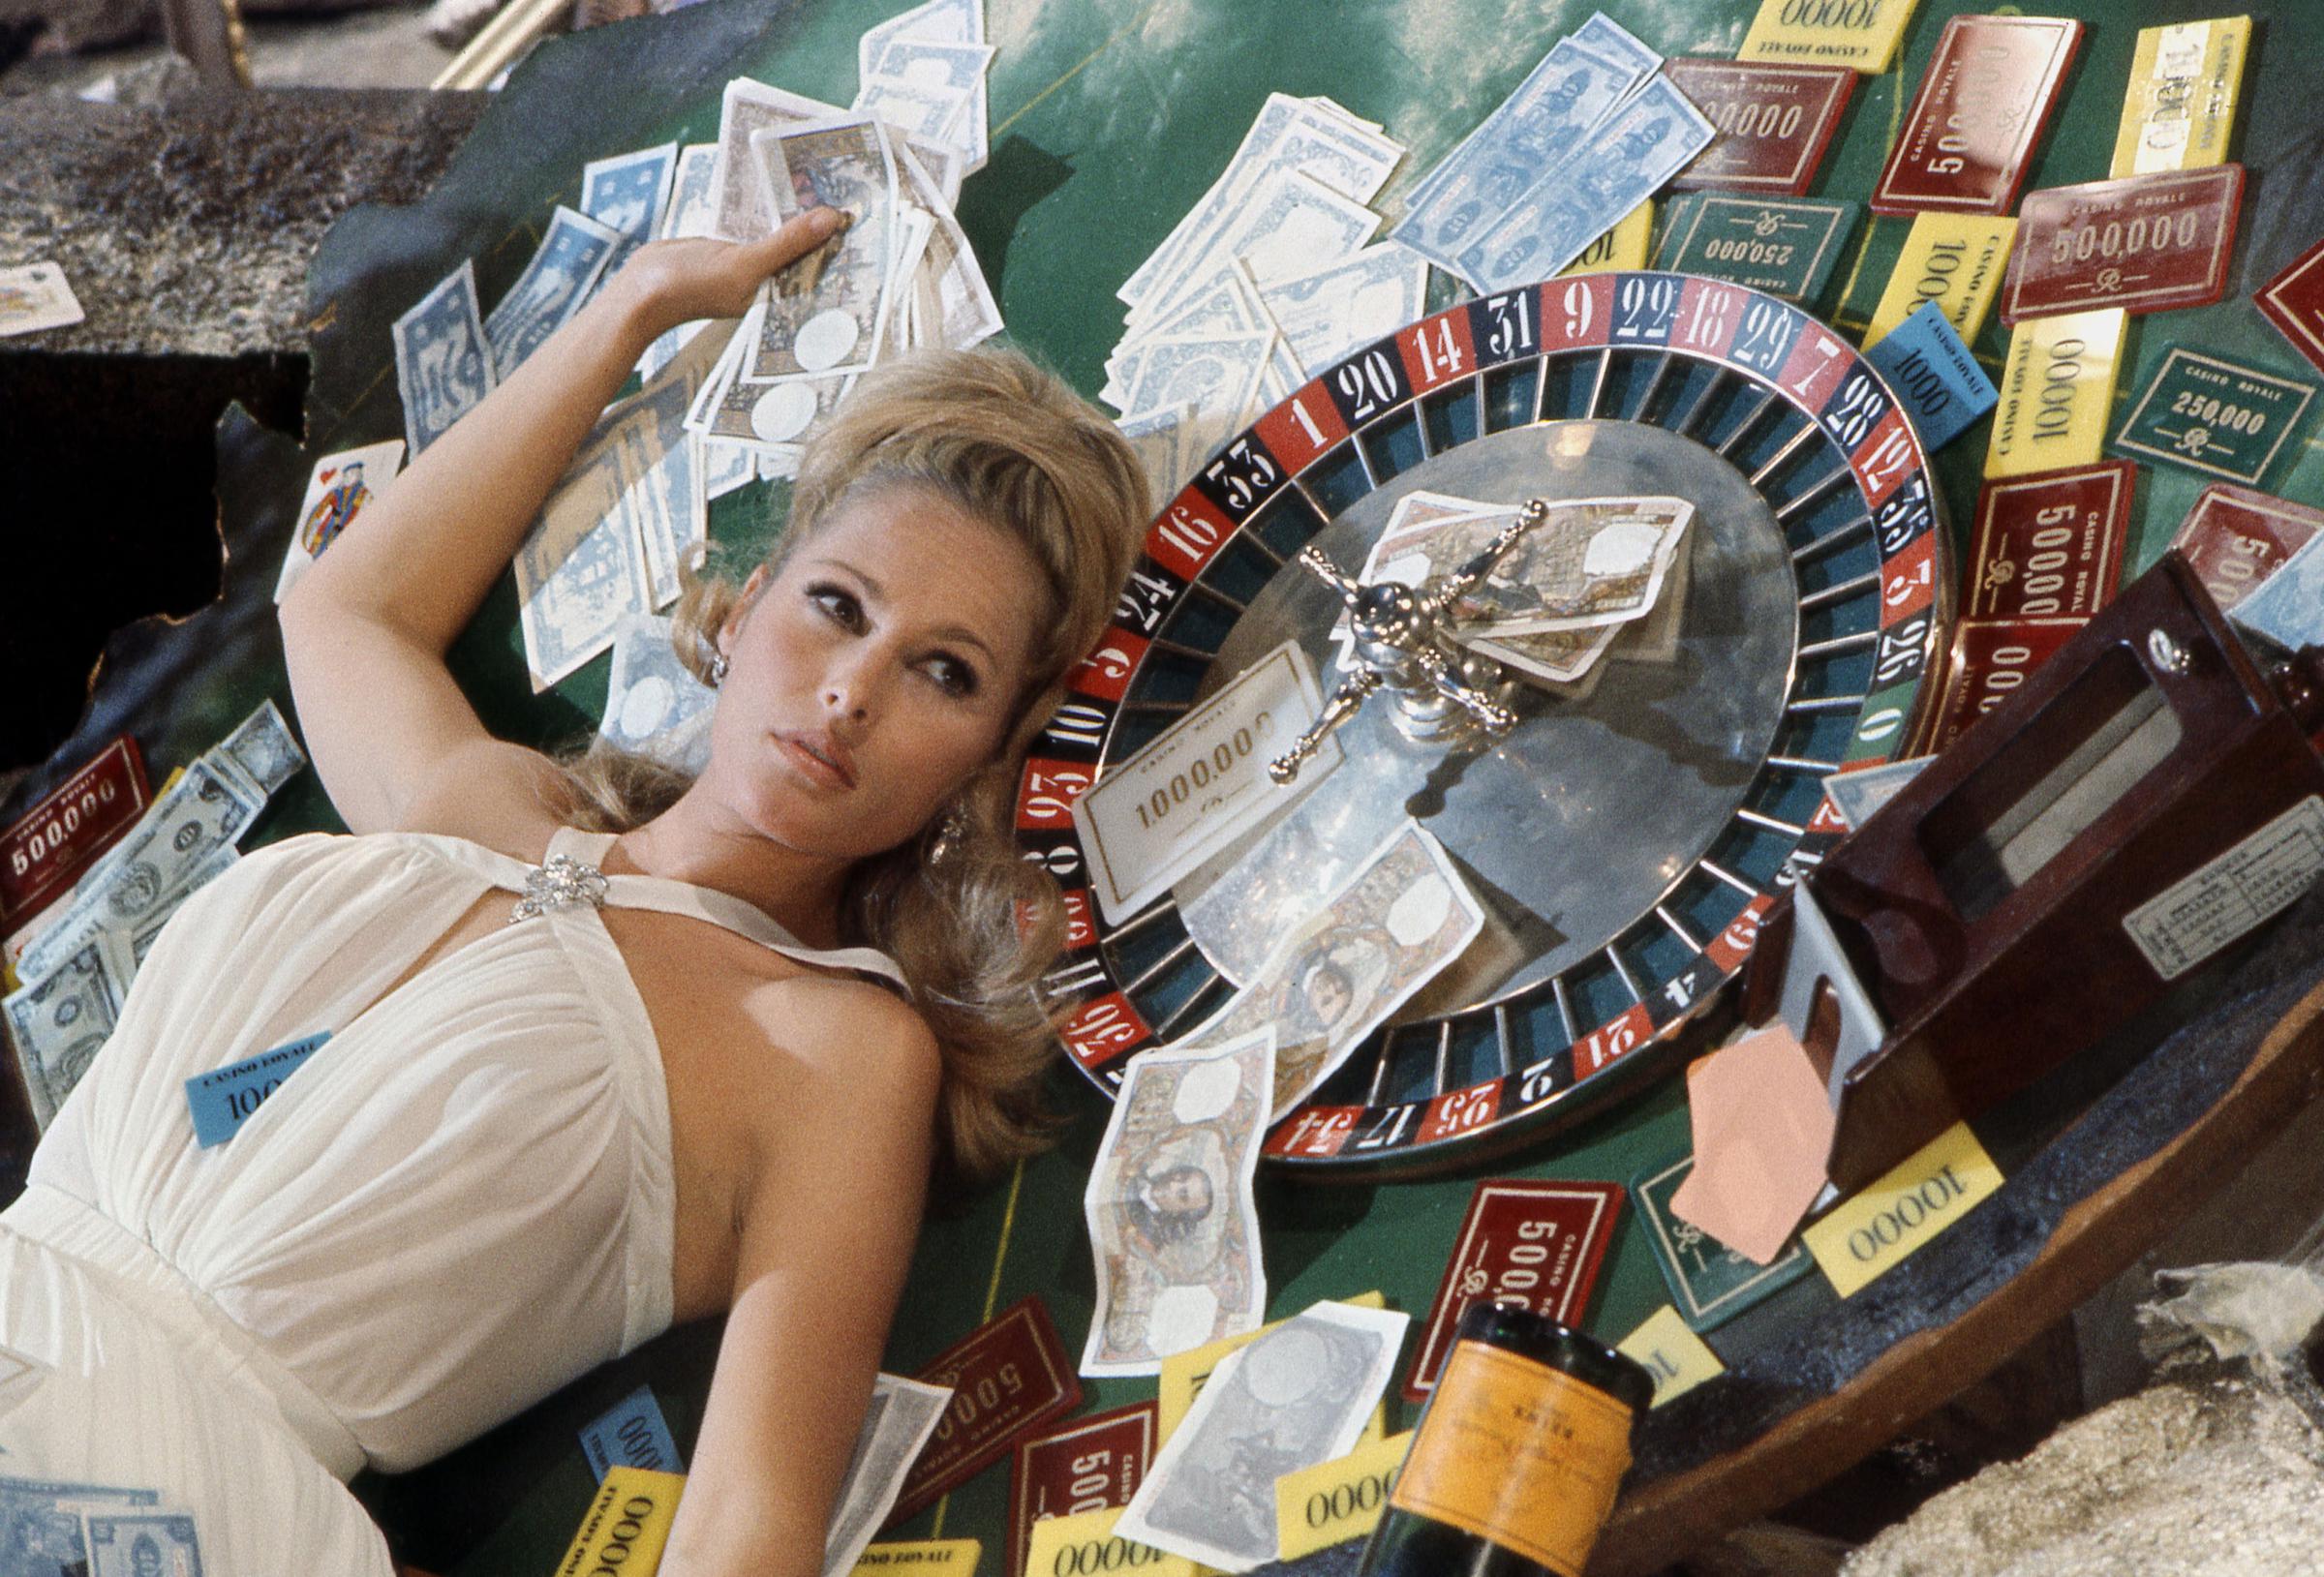 Ursula Andress am Set von "Casino Royale" im Jahr 1967. | Quelle: Getty Images